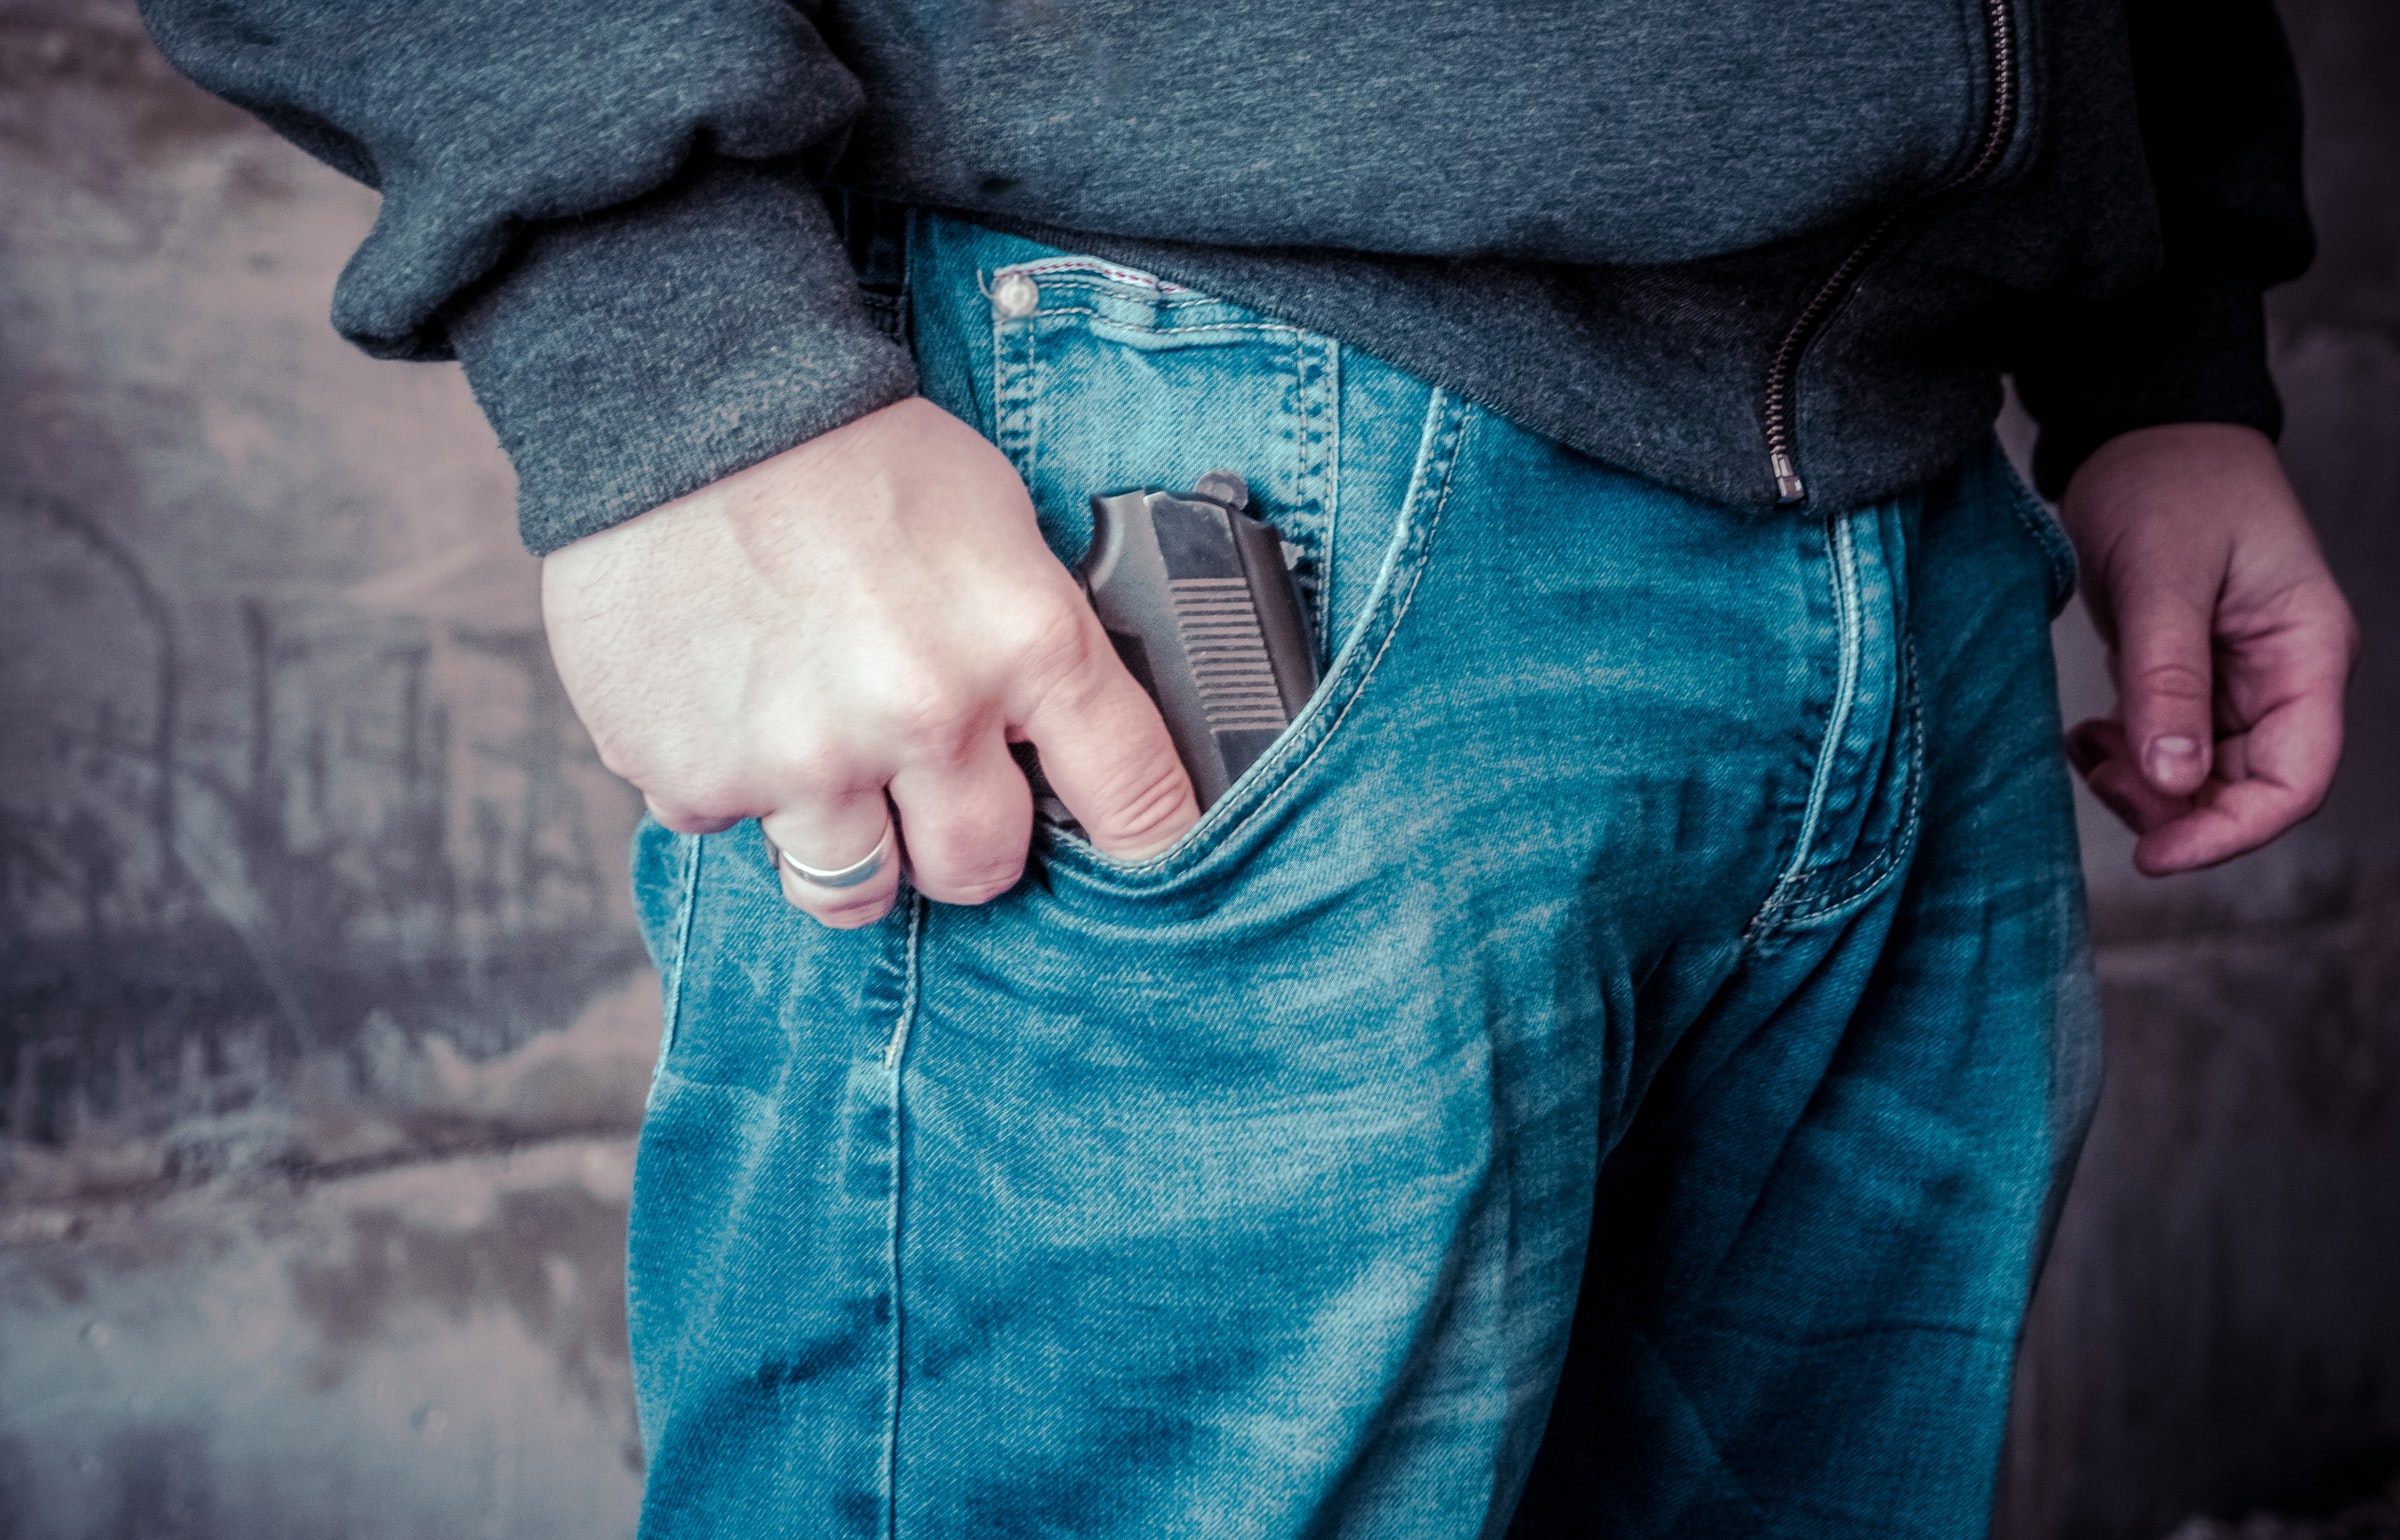 A person holding a gun inside a jeans pocket